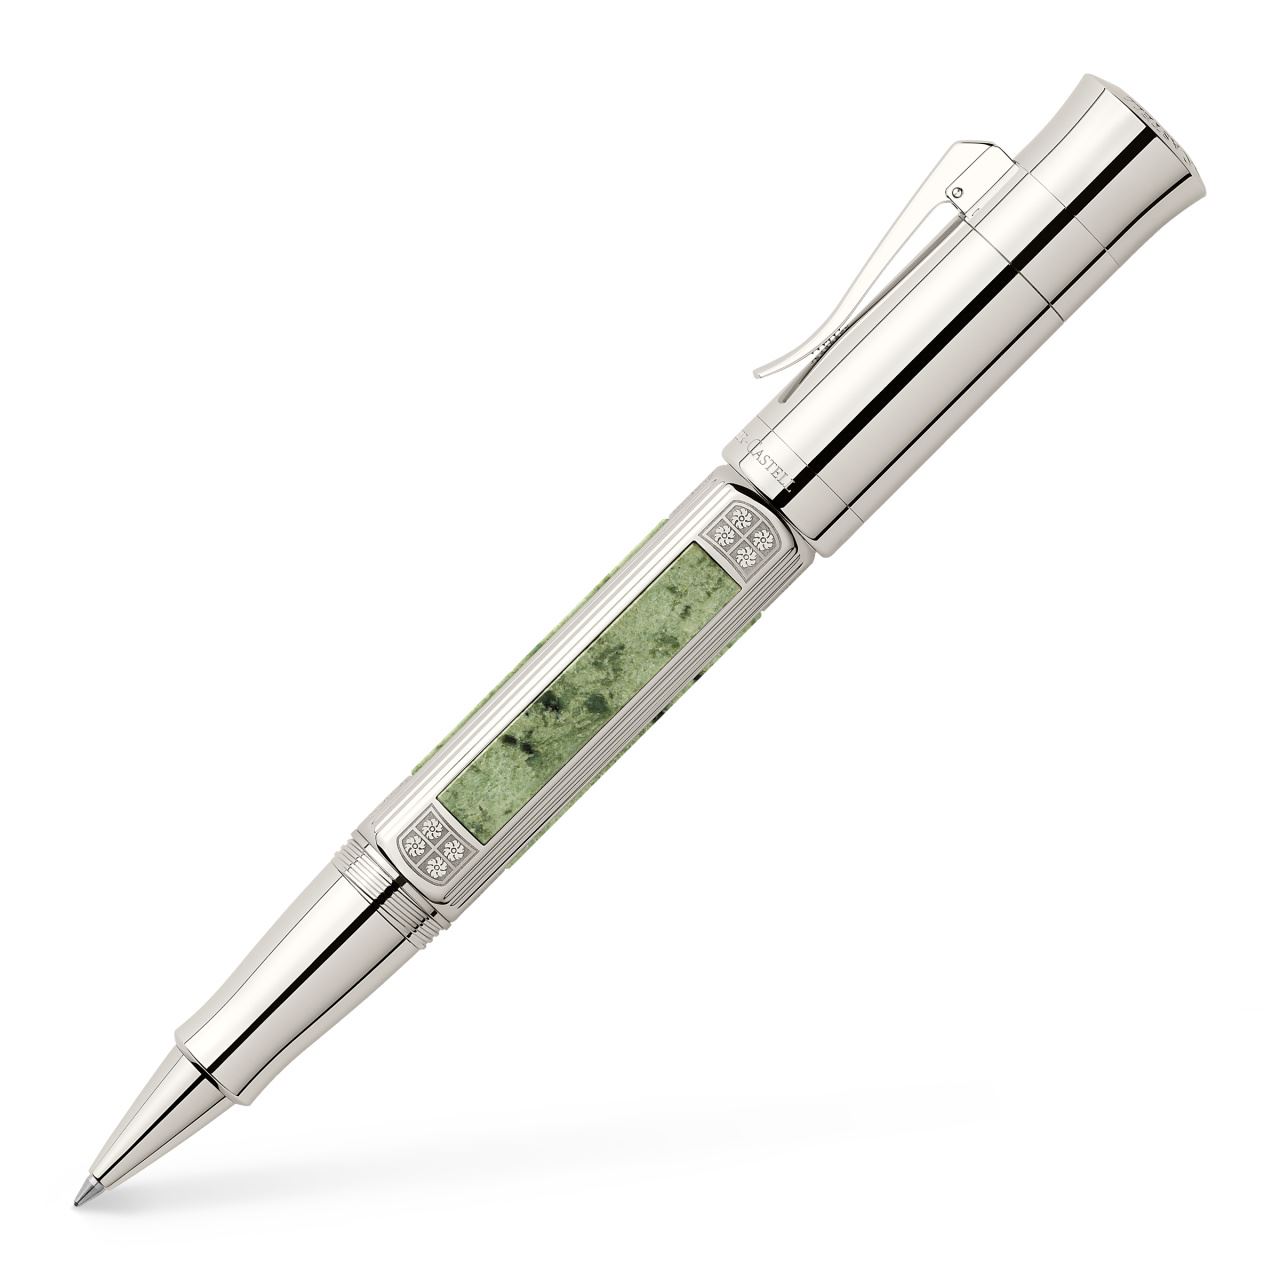 Graf-von-Faber-Castell - Roller, Pen of the Year 2015 platinum-plated